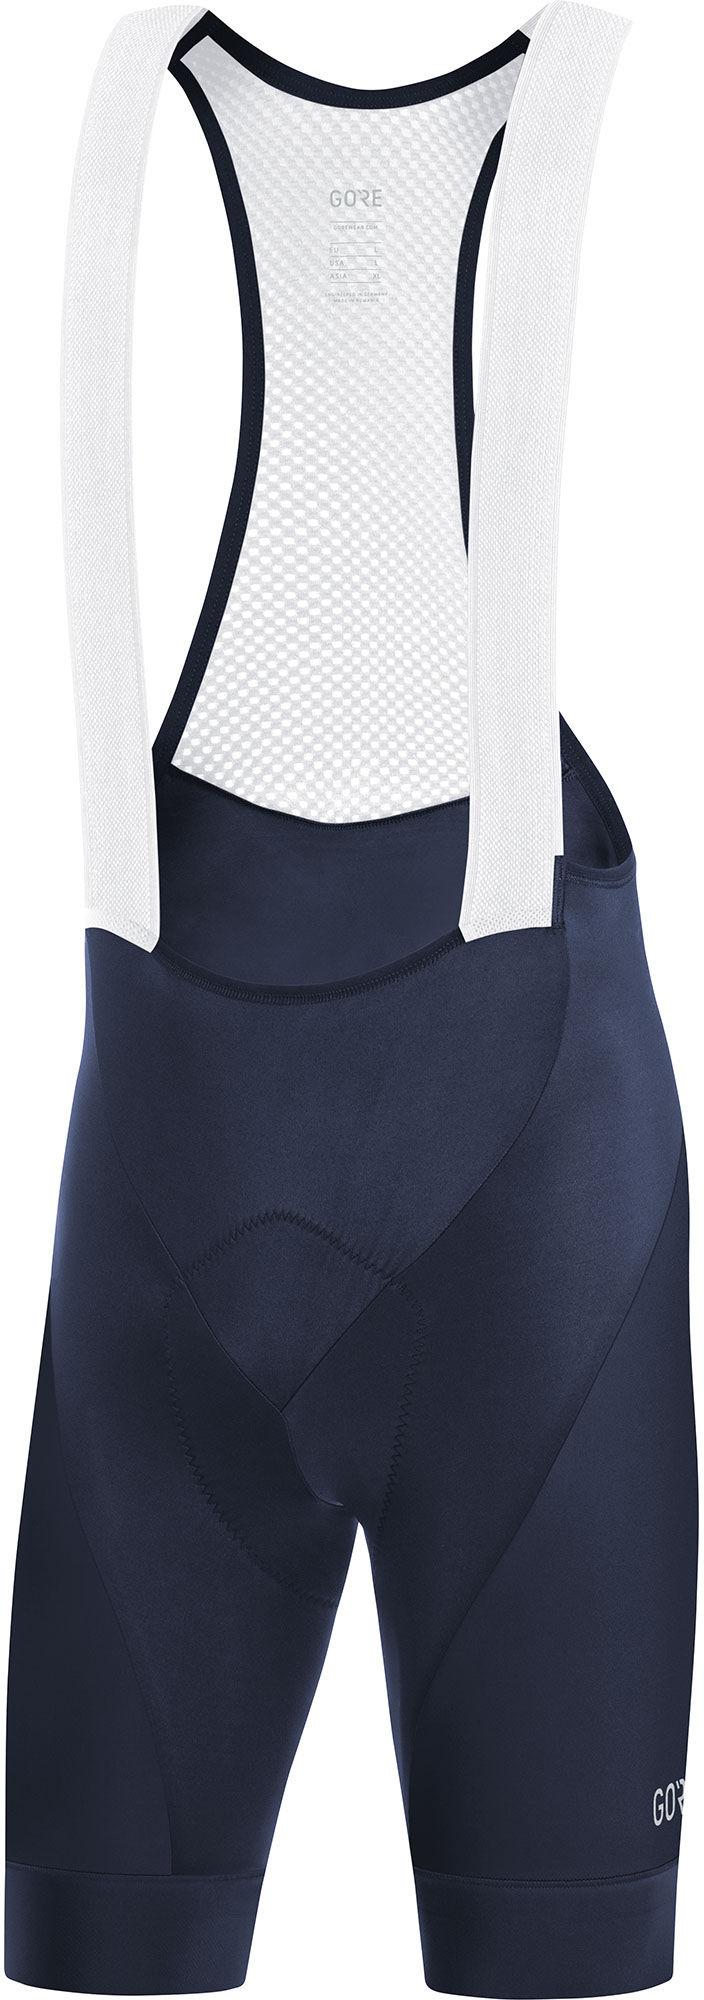 Gorewear C3 Bib Shorts Plus - Orbit Blue